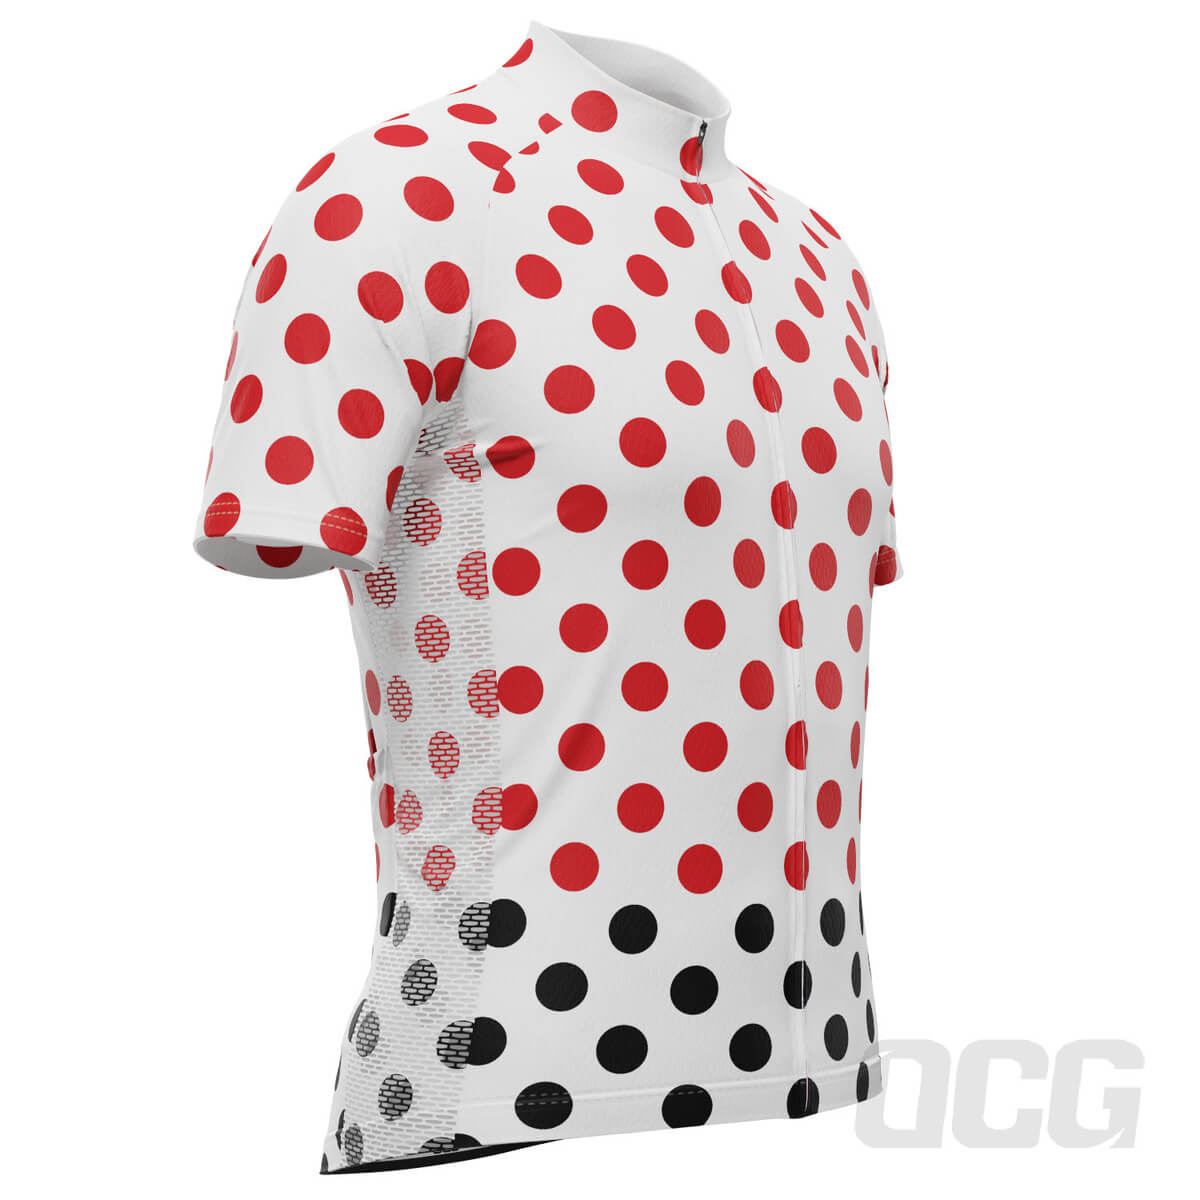 Men's White Polka Dot Short Sleeve Cycling Jersey